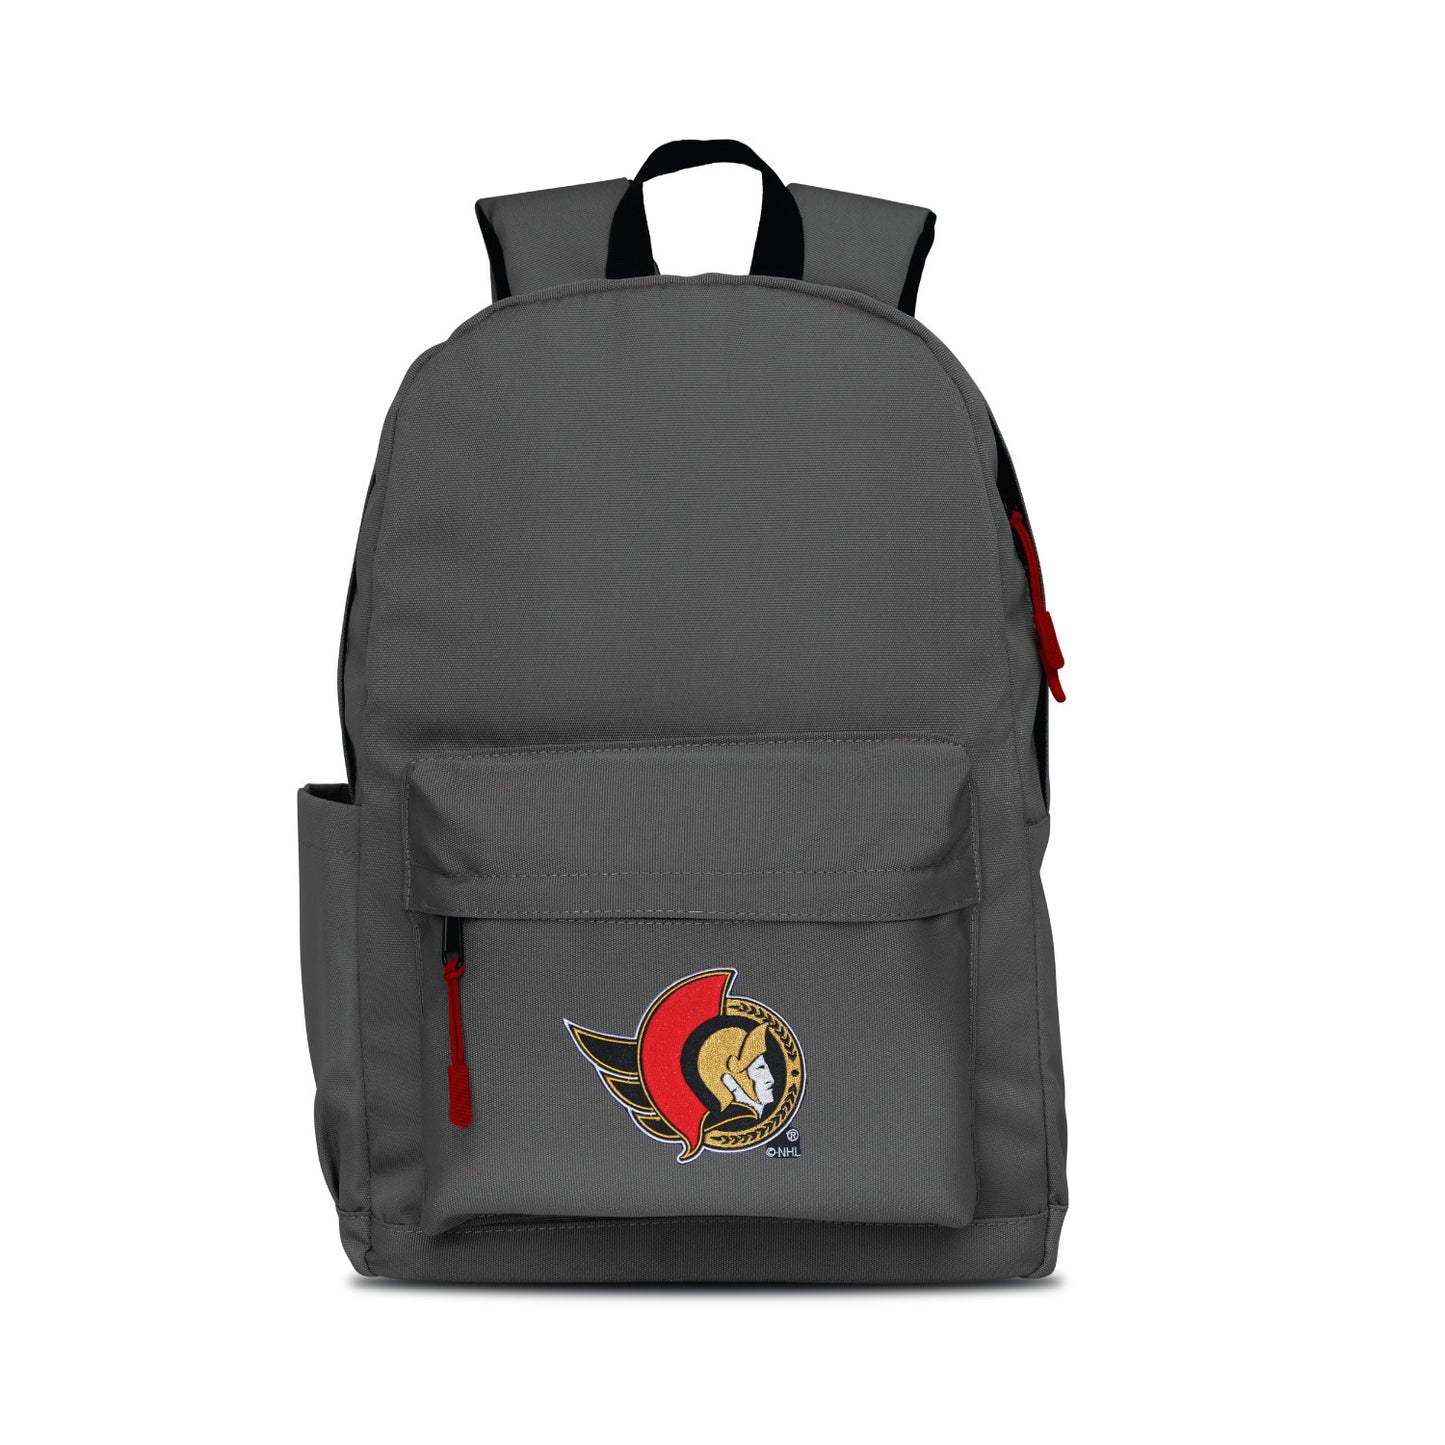 Ottawa Senators Campus Laptop Backpack- Gray